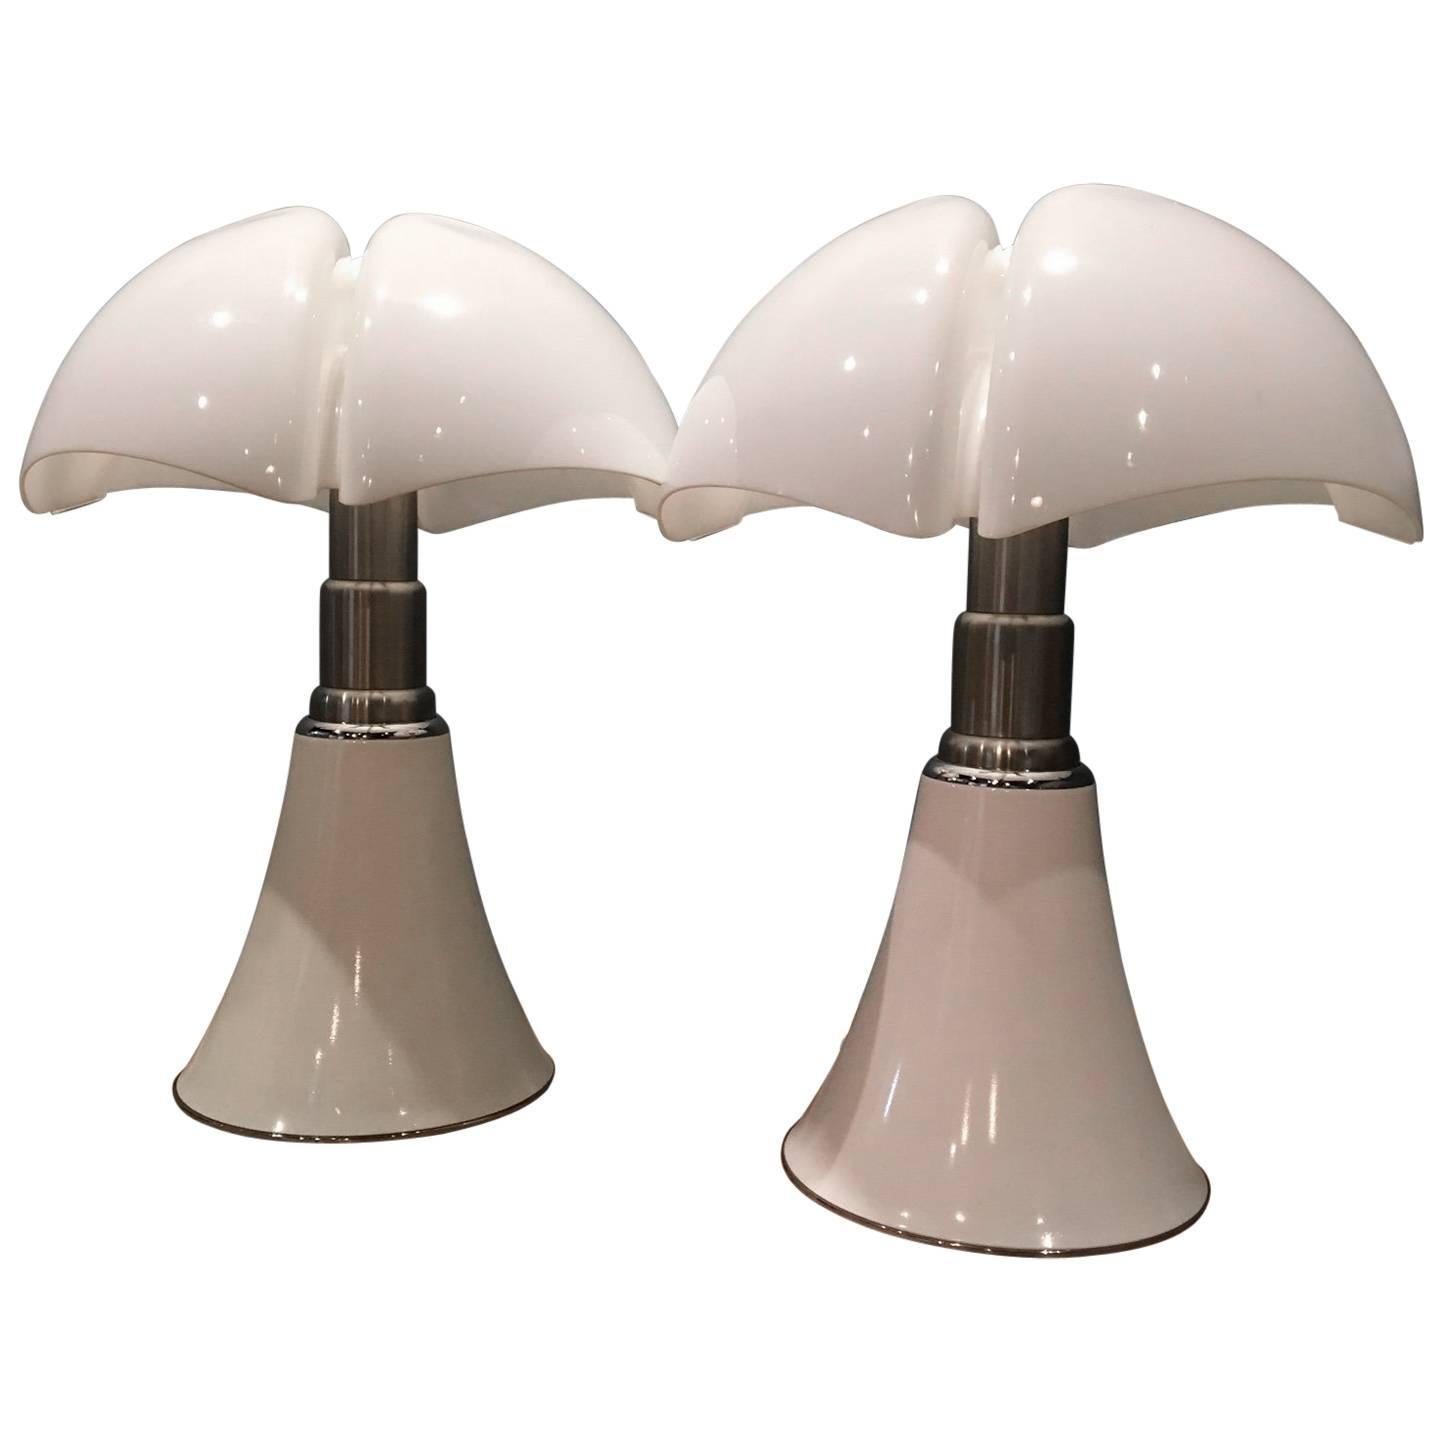 Colosal Pair of Gae Aulenti "Pipipstrello" Lamps, 1965